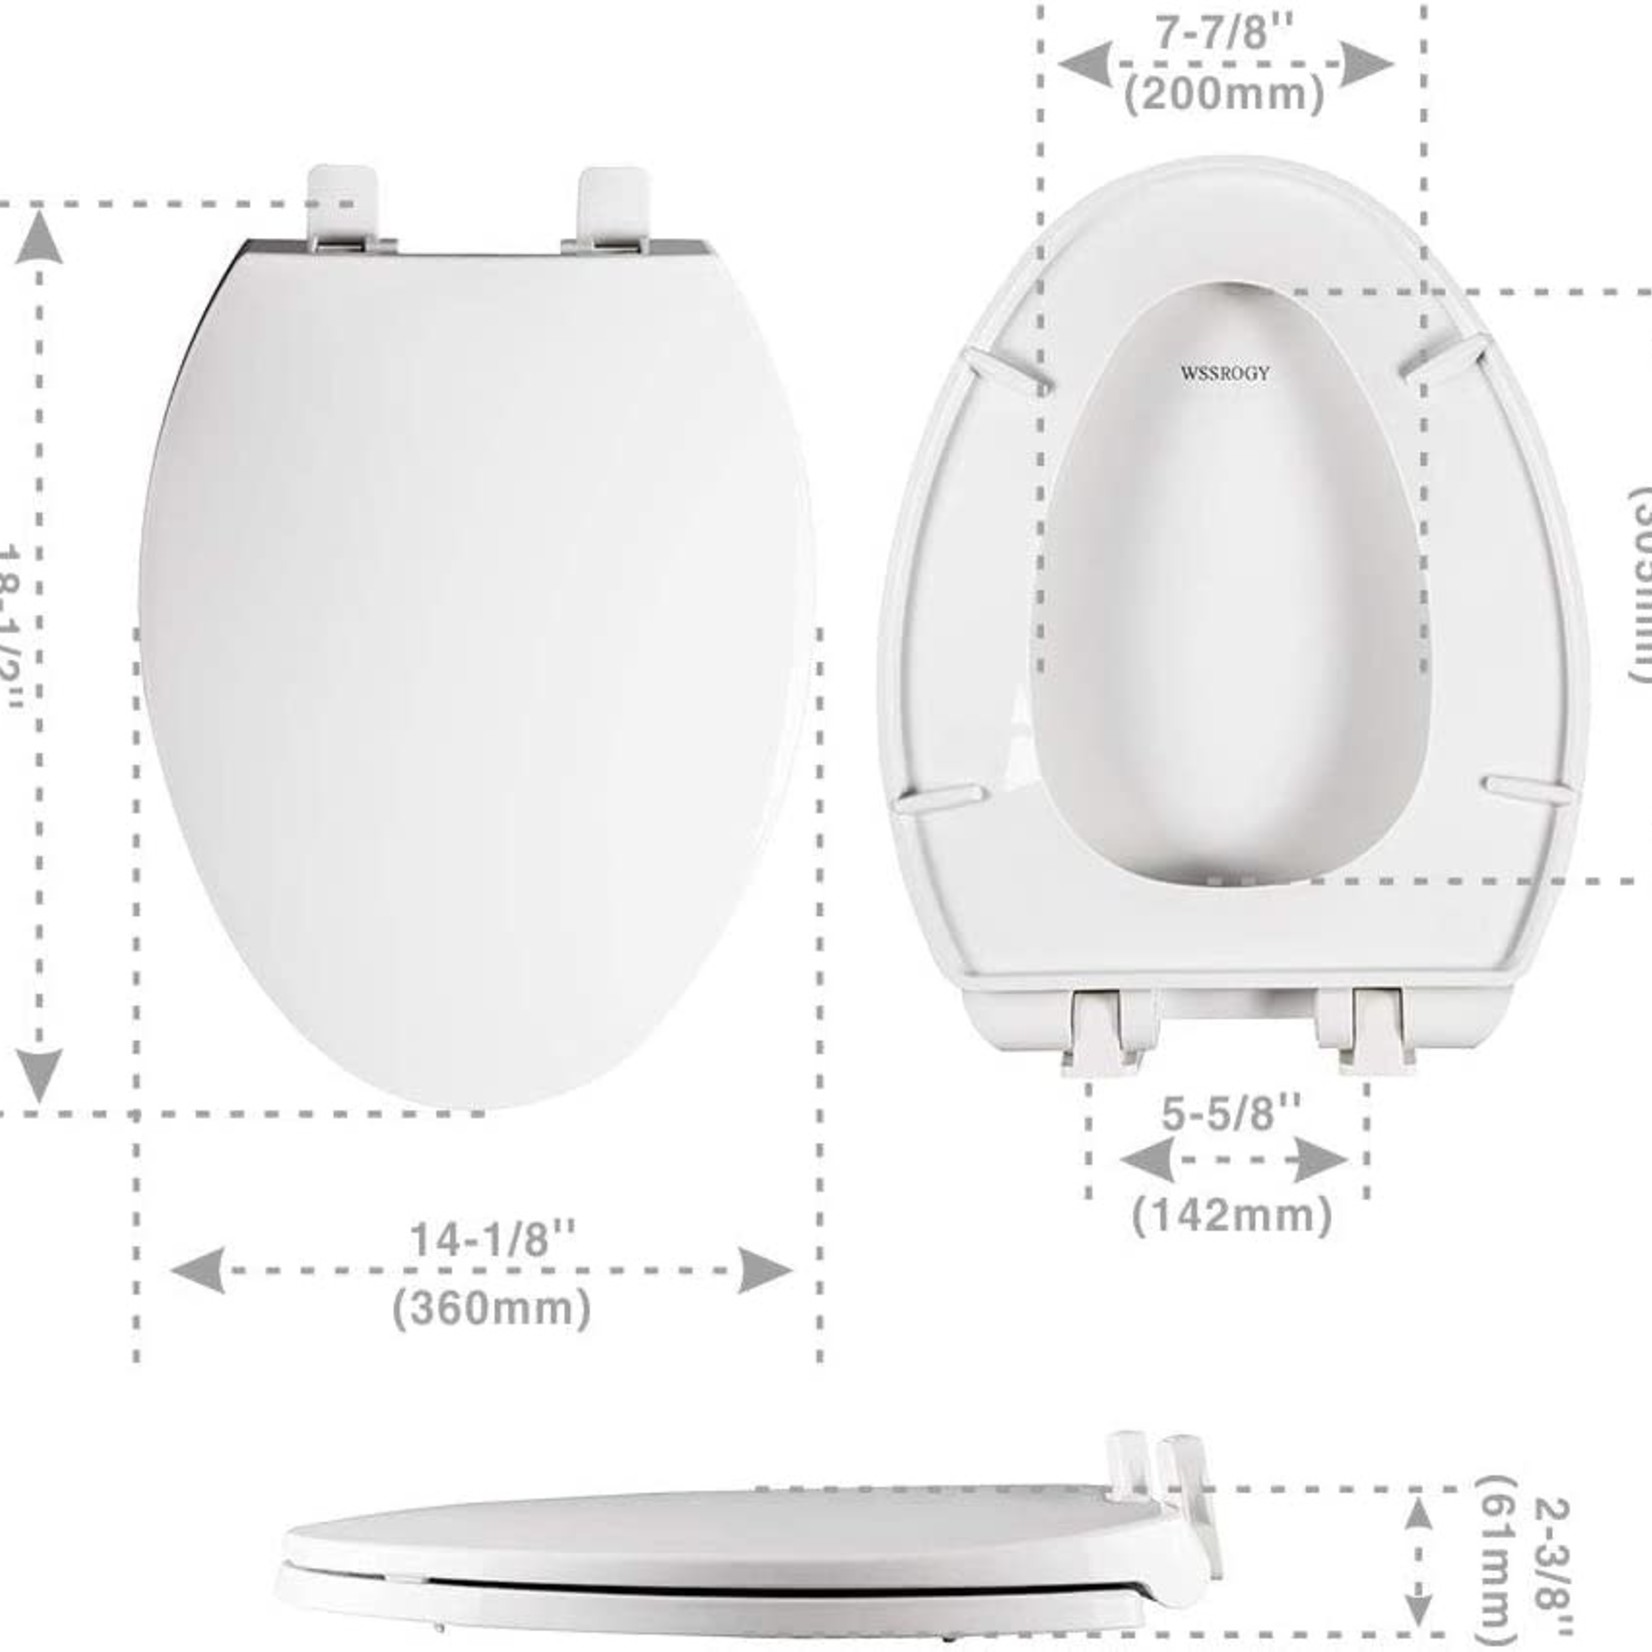 Wssrogy Elongated Toilet Seat W/Cover- White